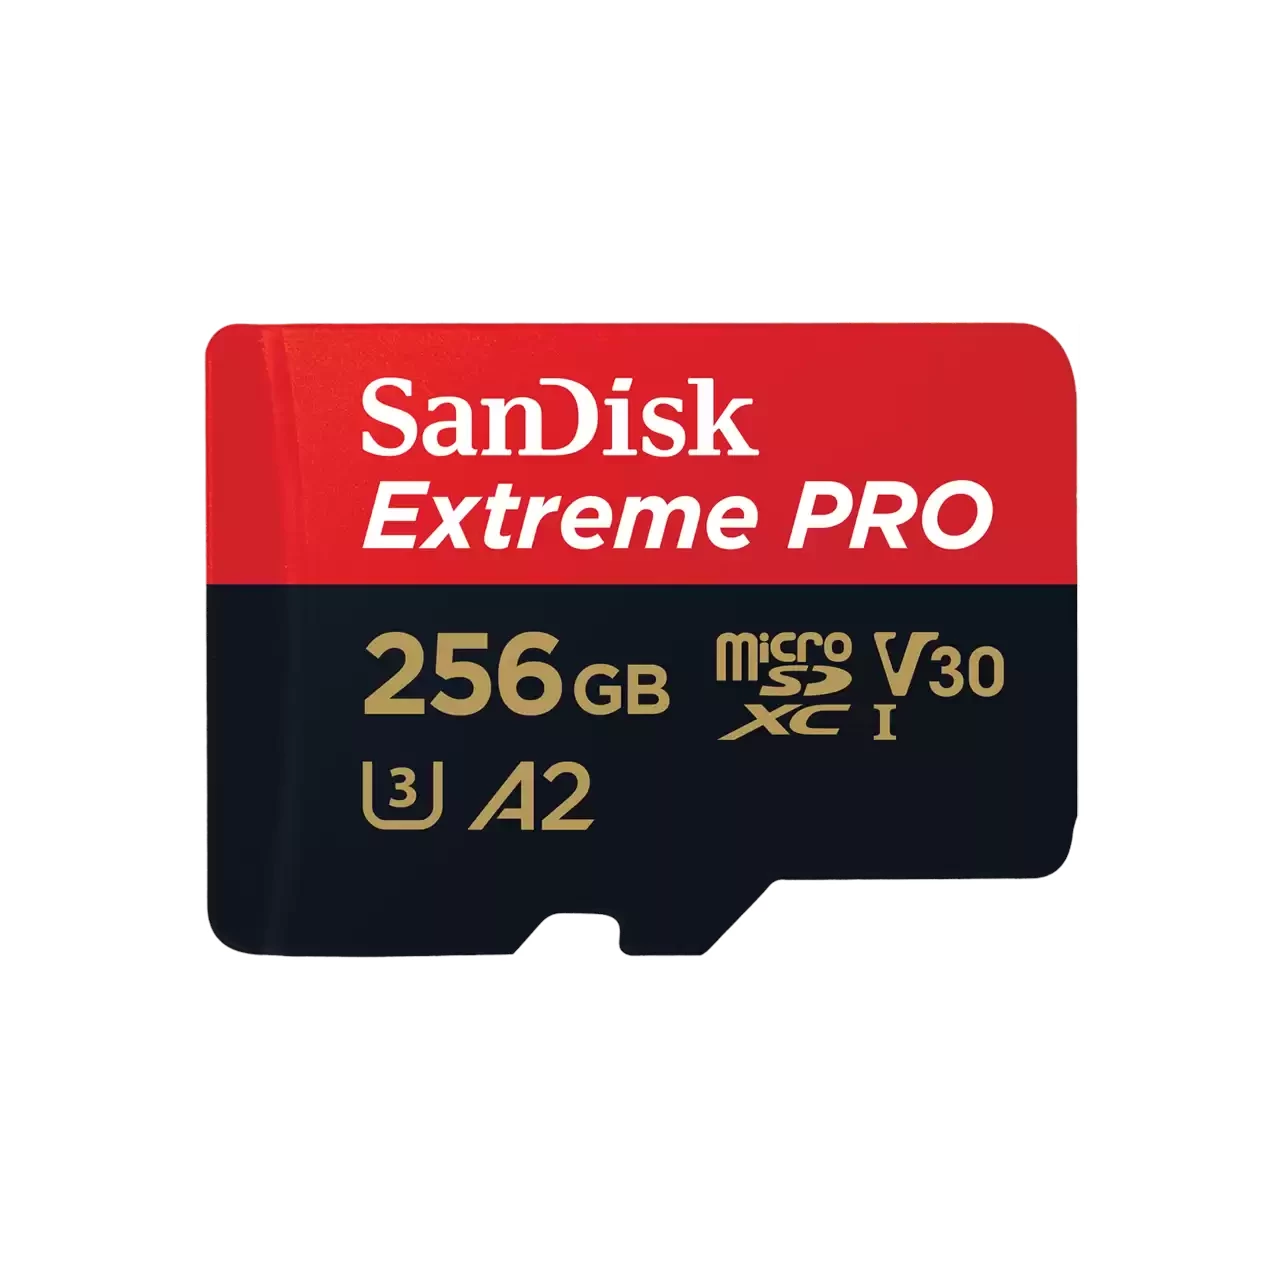 Sandisk Extreme Pro 256Gb MicroSDXC UHS-I Card #SDSQXCD-256G